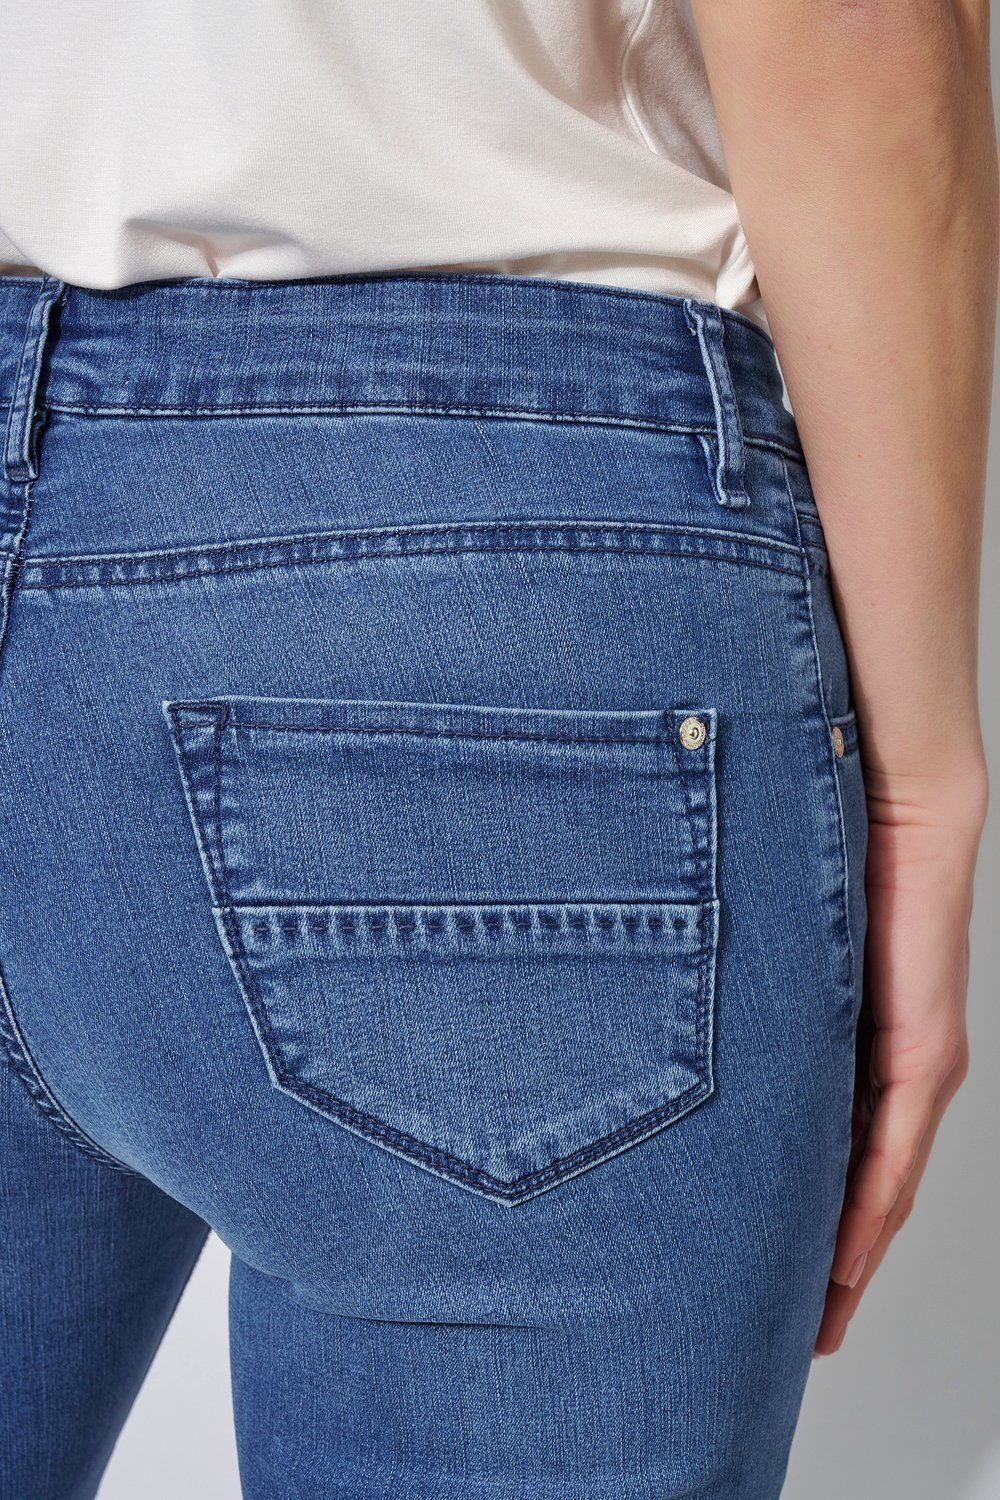 blue 5-Pocket-Jeans bleached TONI